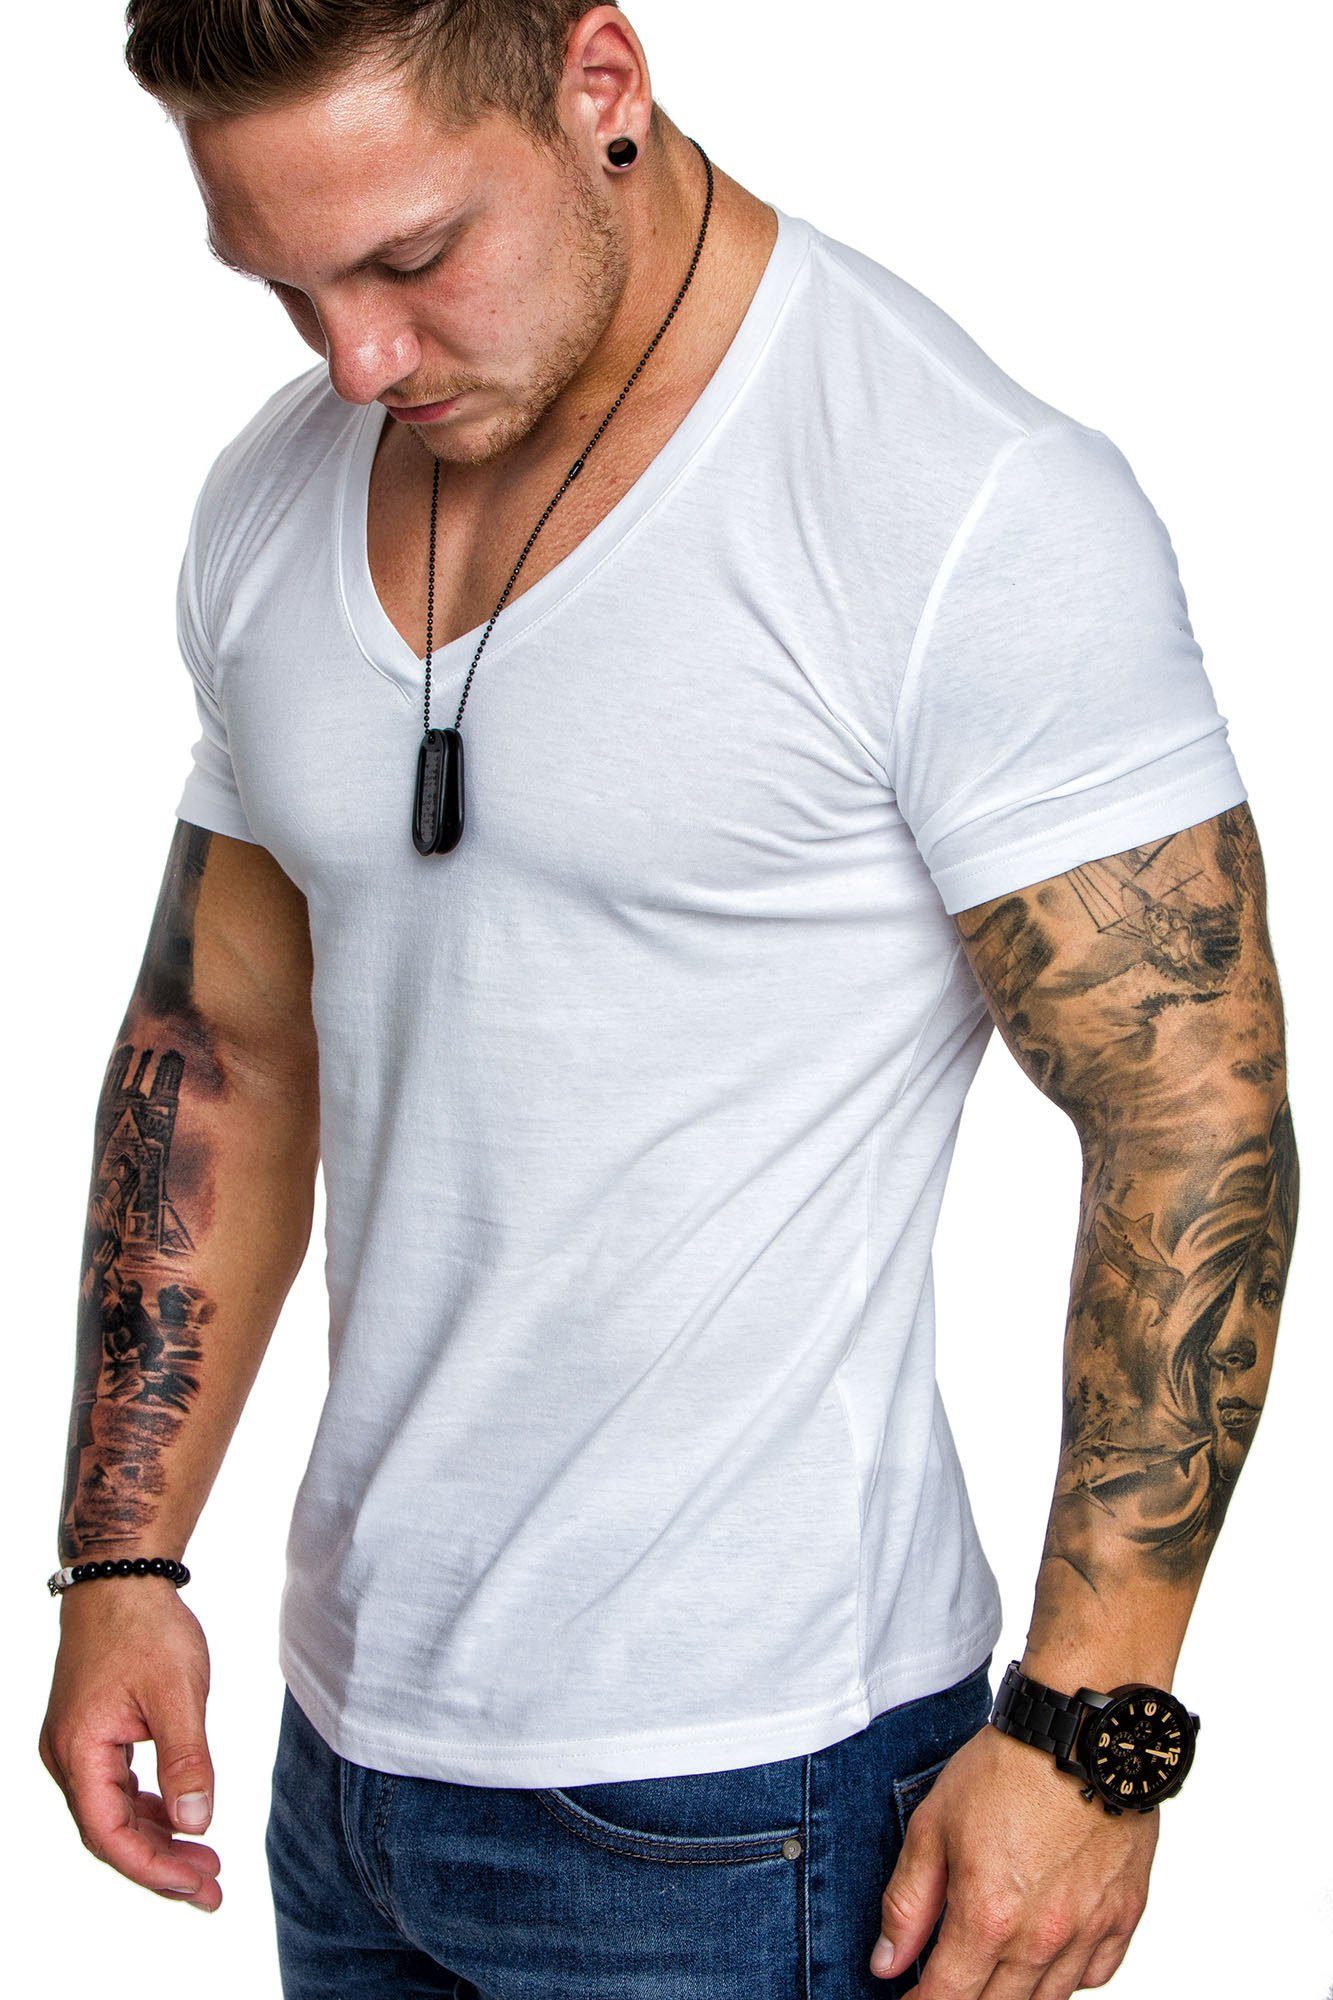 Amaci&Sons T-Shirt EUGENE Basic T-Shirt mit V-Ausschnitt Herren Einfarbig Vintage V-Neck Basic V-Ausschnitt Shirt Weiß